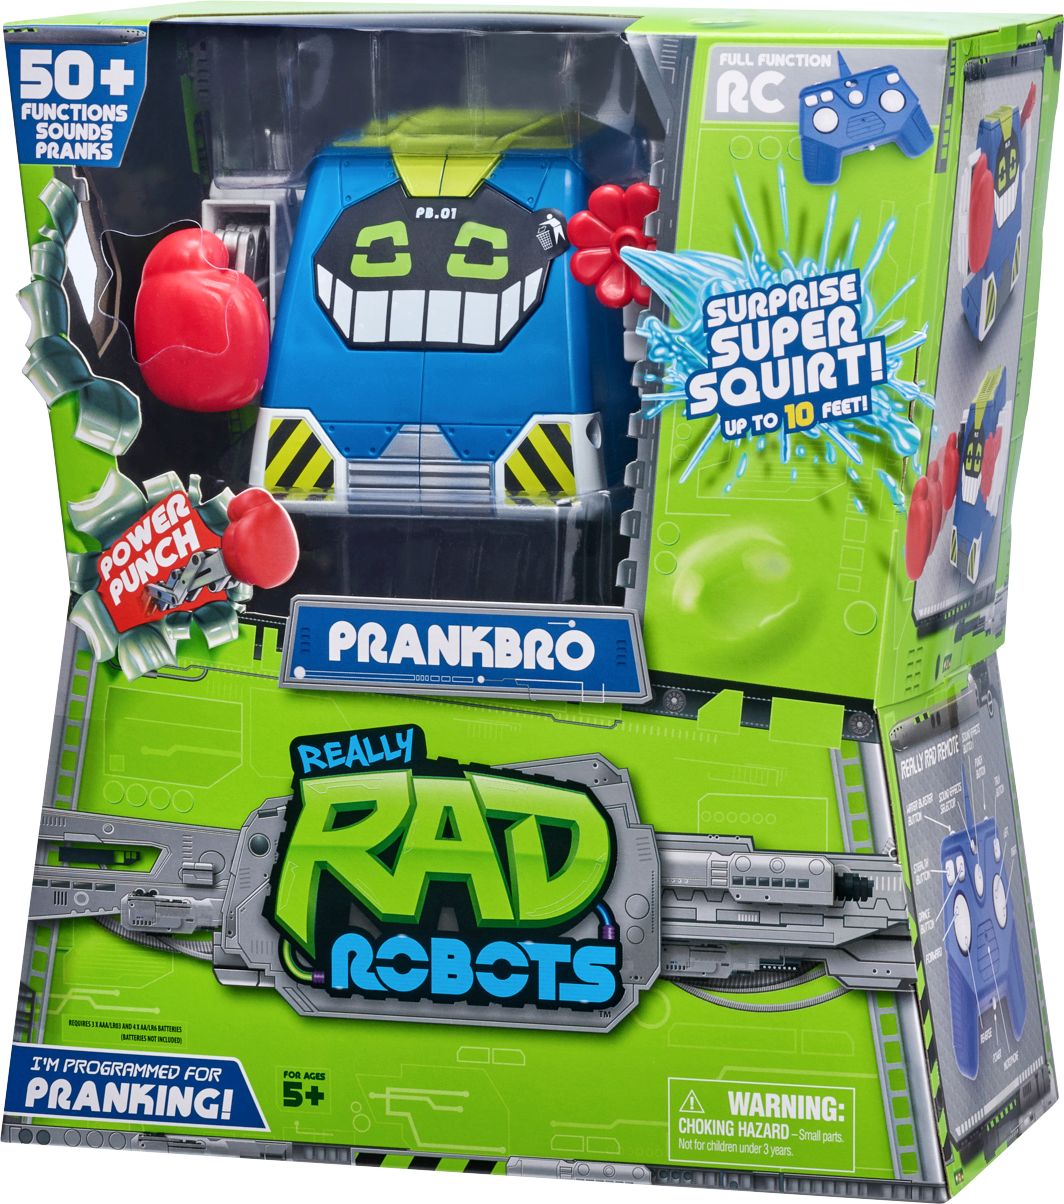 Prankbro 50 Functions Sounds Pranks for sale online Really Rad Robots 